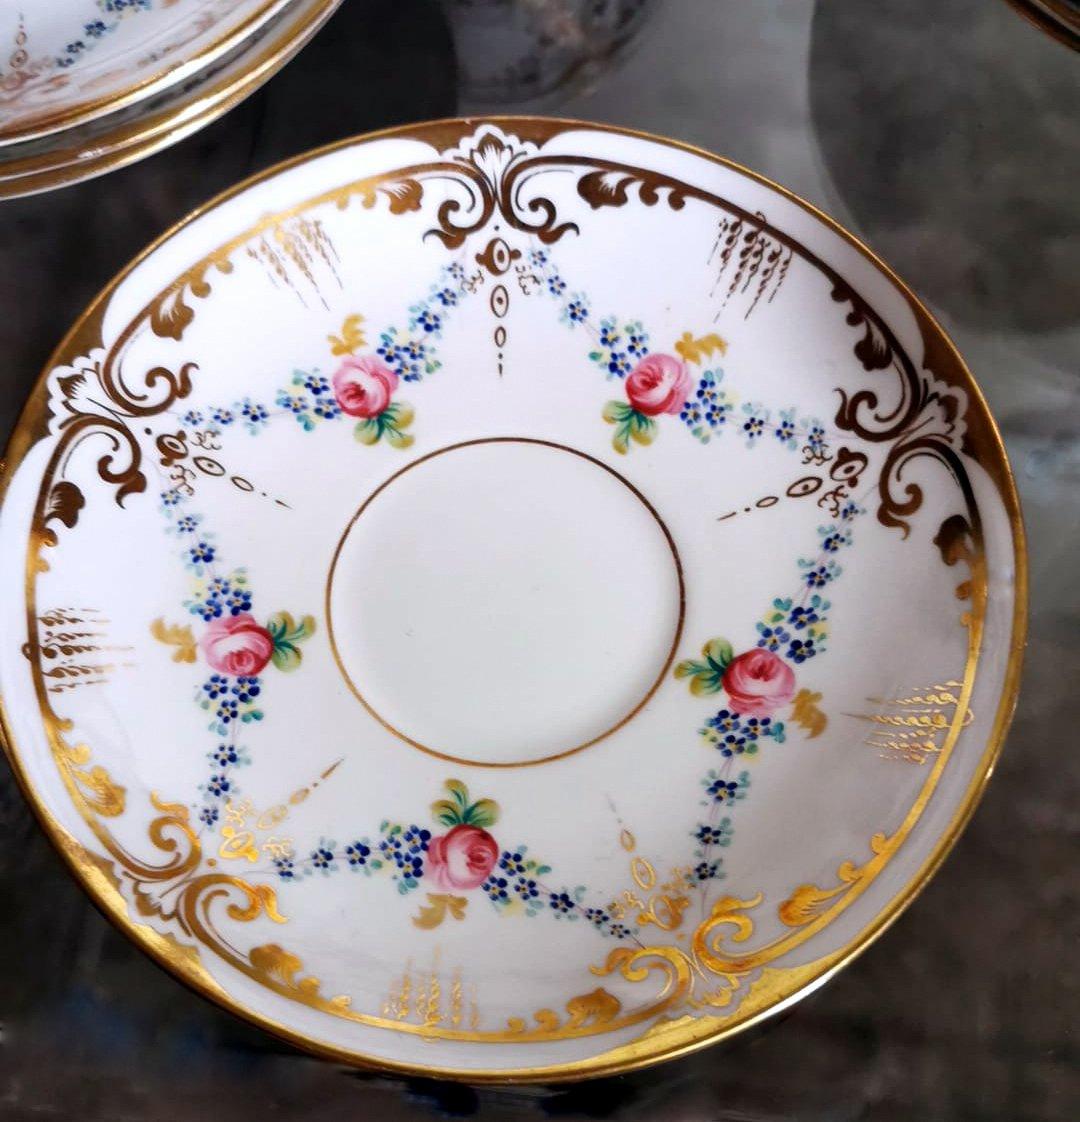 Napoleon III Style Porcelain De Paris Coffee/Tea Service For 12 People-28 Pieces For Sale 1